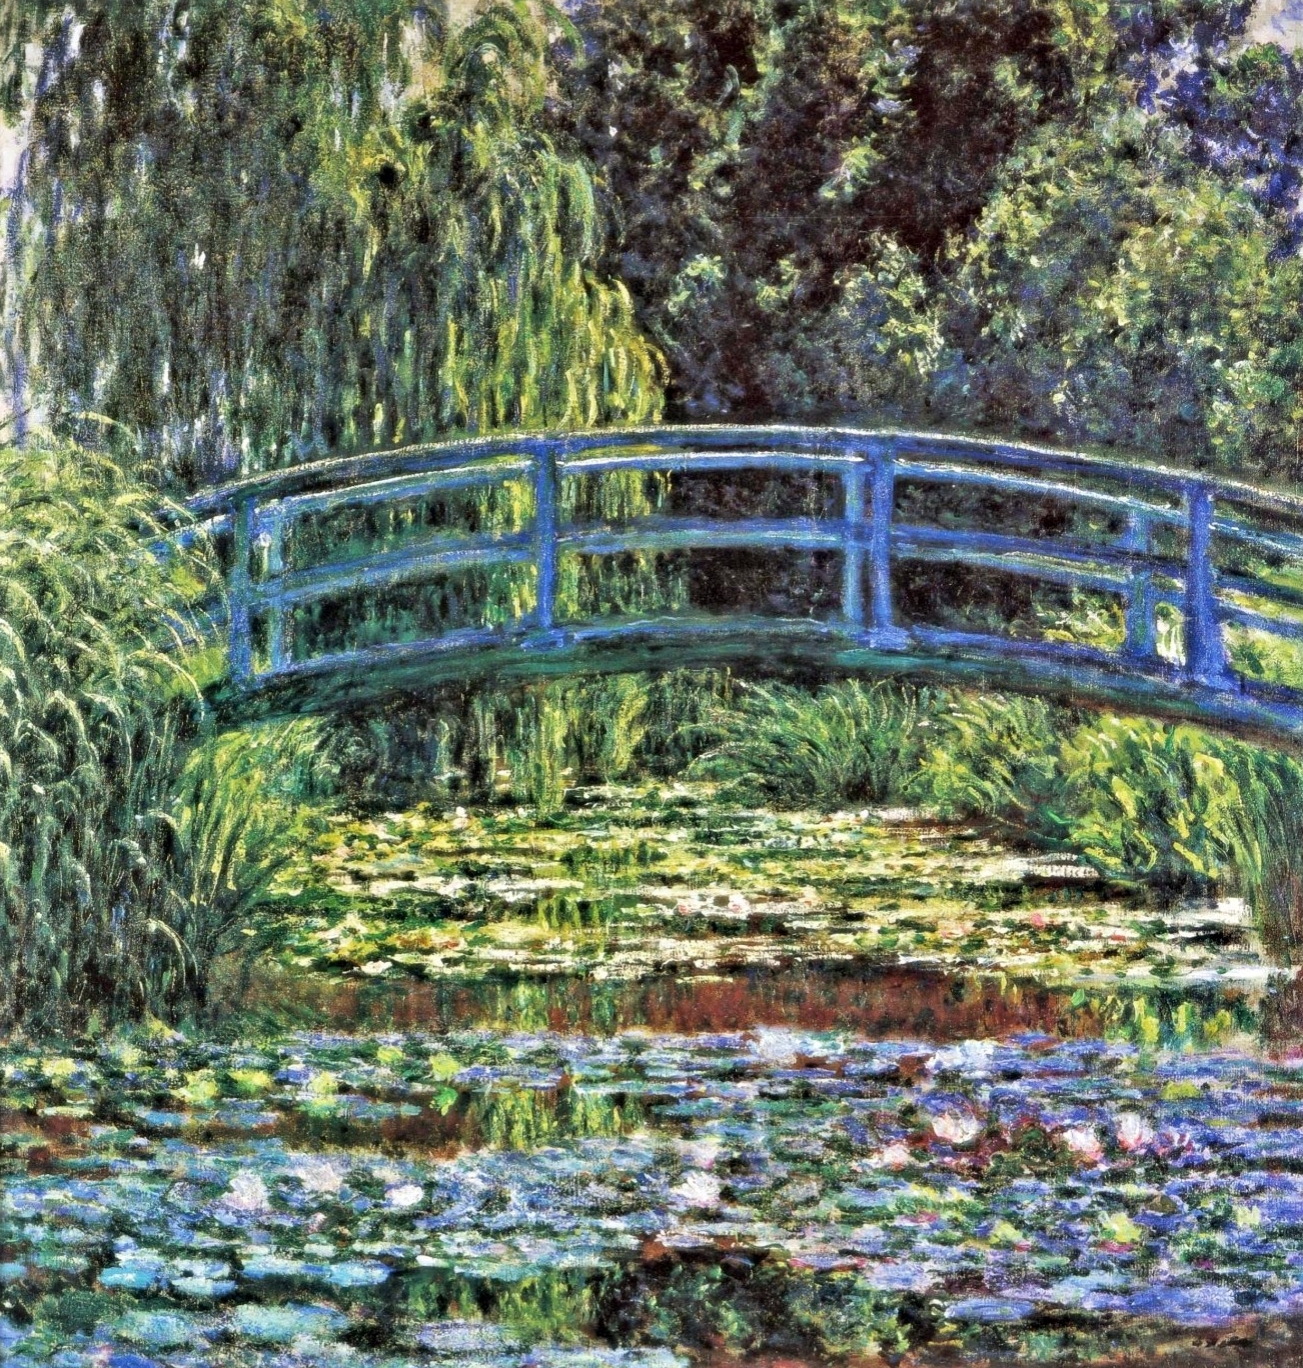 Claude+Monet-1840-1926 (399).jpg